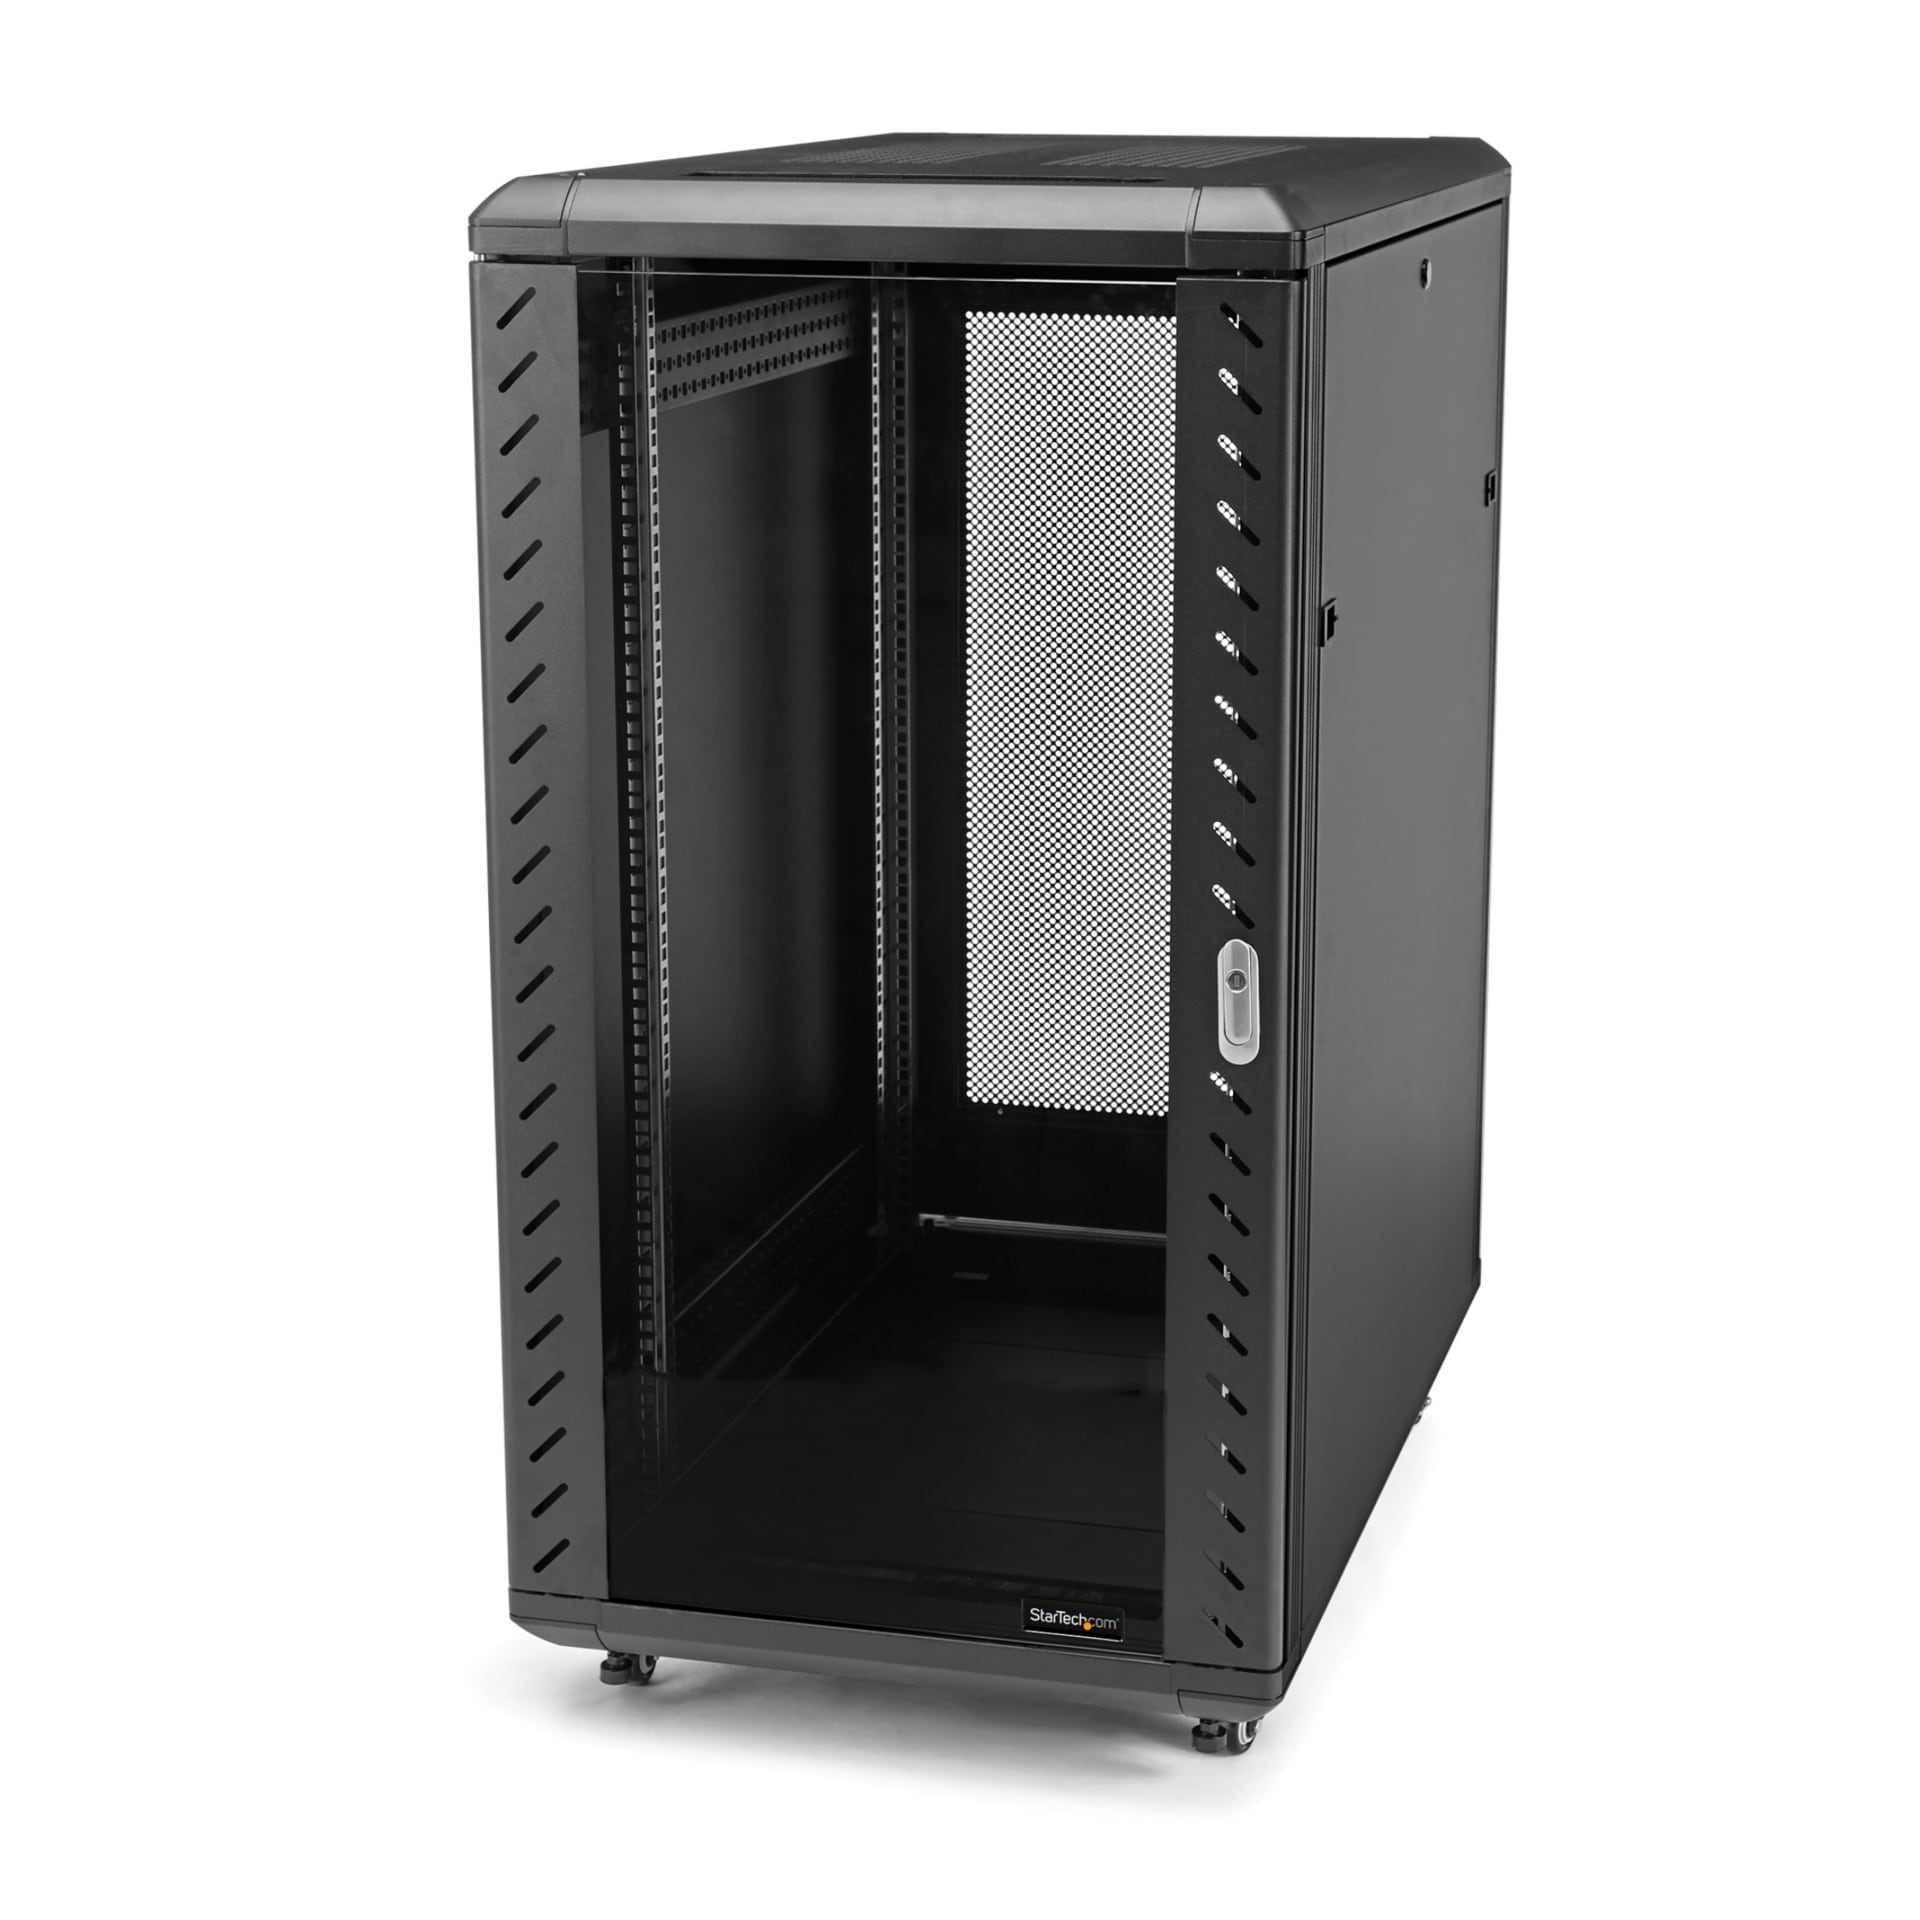 StarTech.com 4-Post 25U Server Rack Cabinet, 19" Data Rack Cabinet for Computer / IT Equipment, Half-Height Network Rack